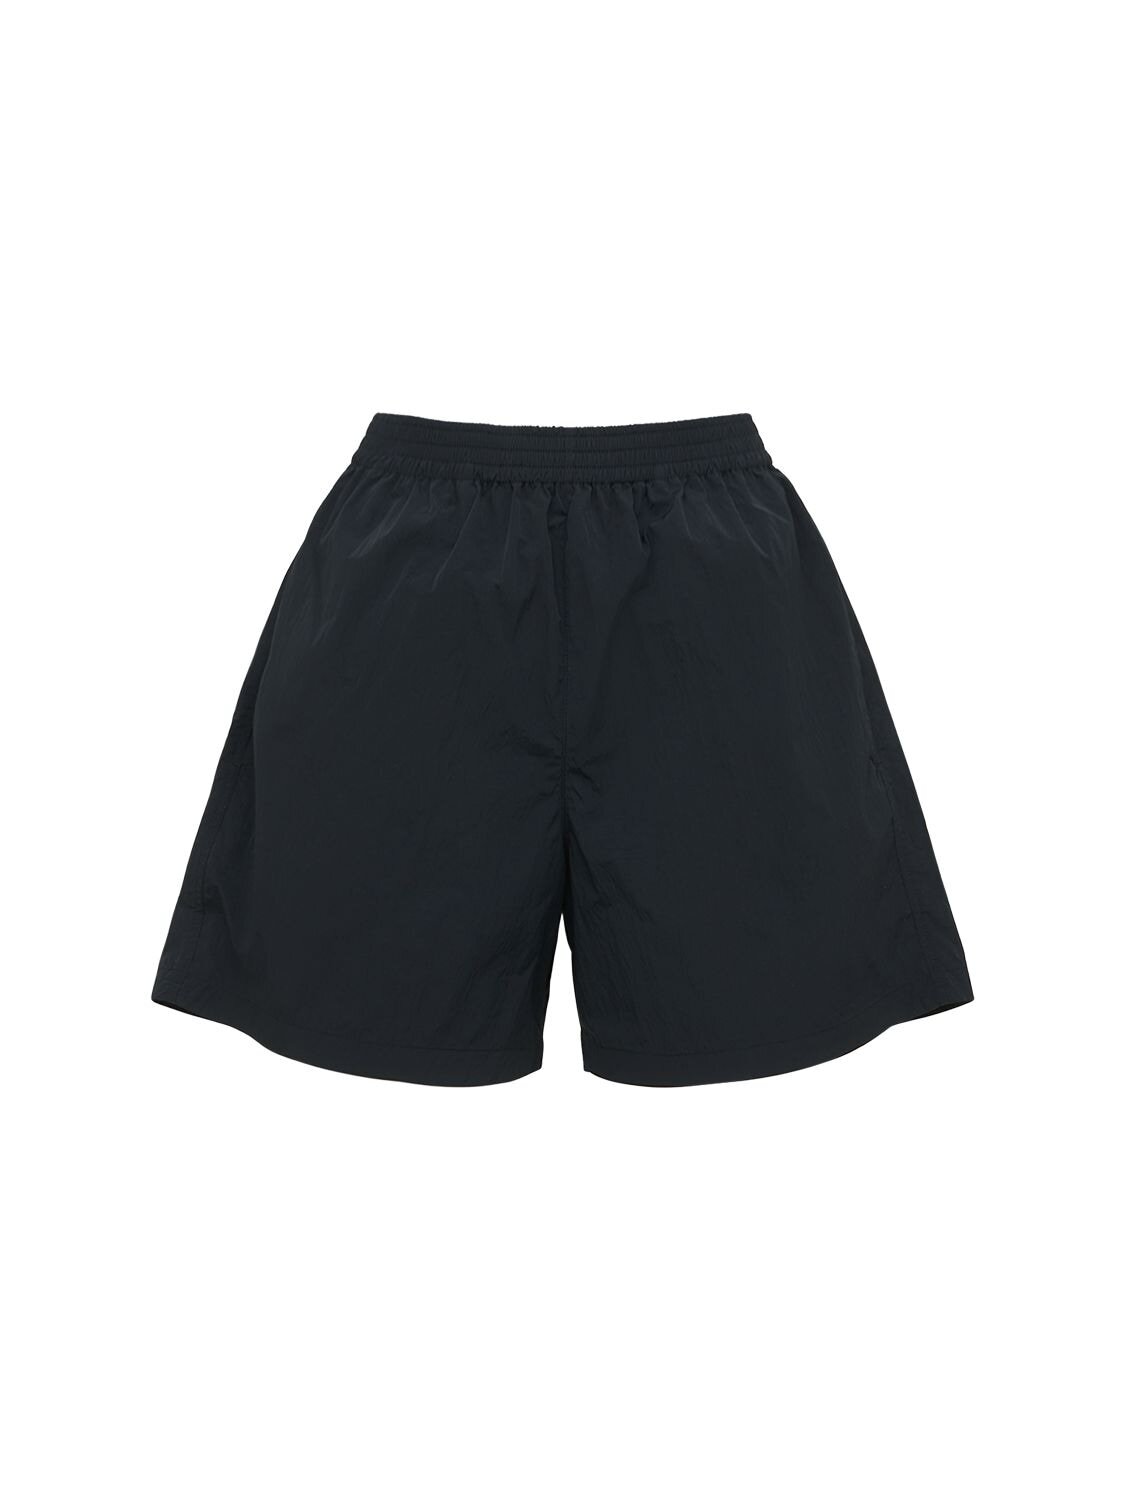 LIDO Windbreaker Nylon Shorts in black